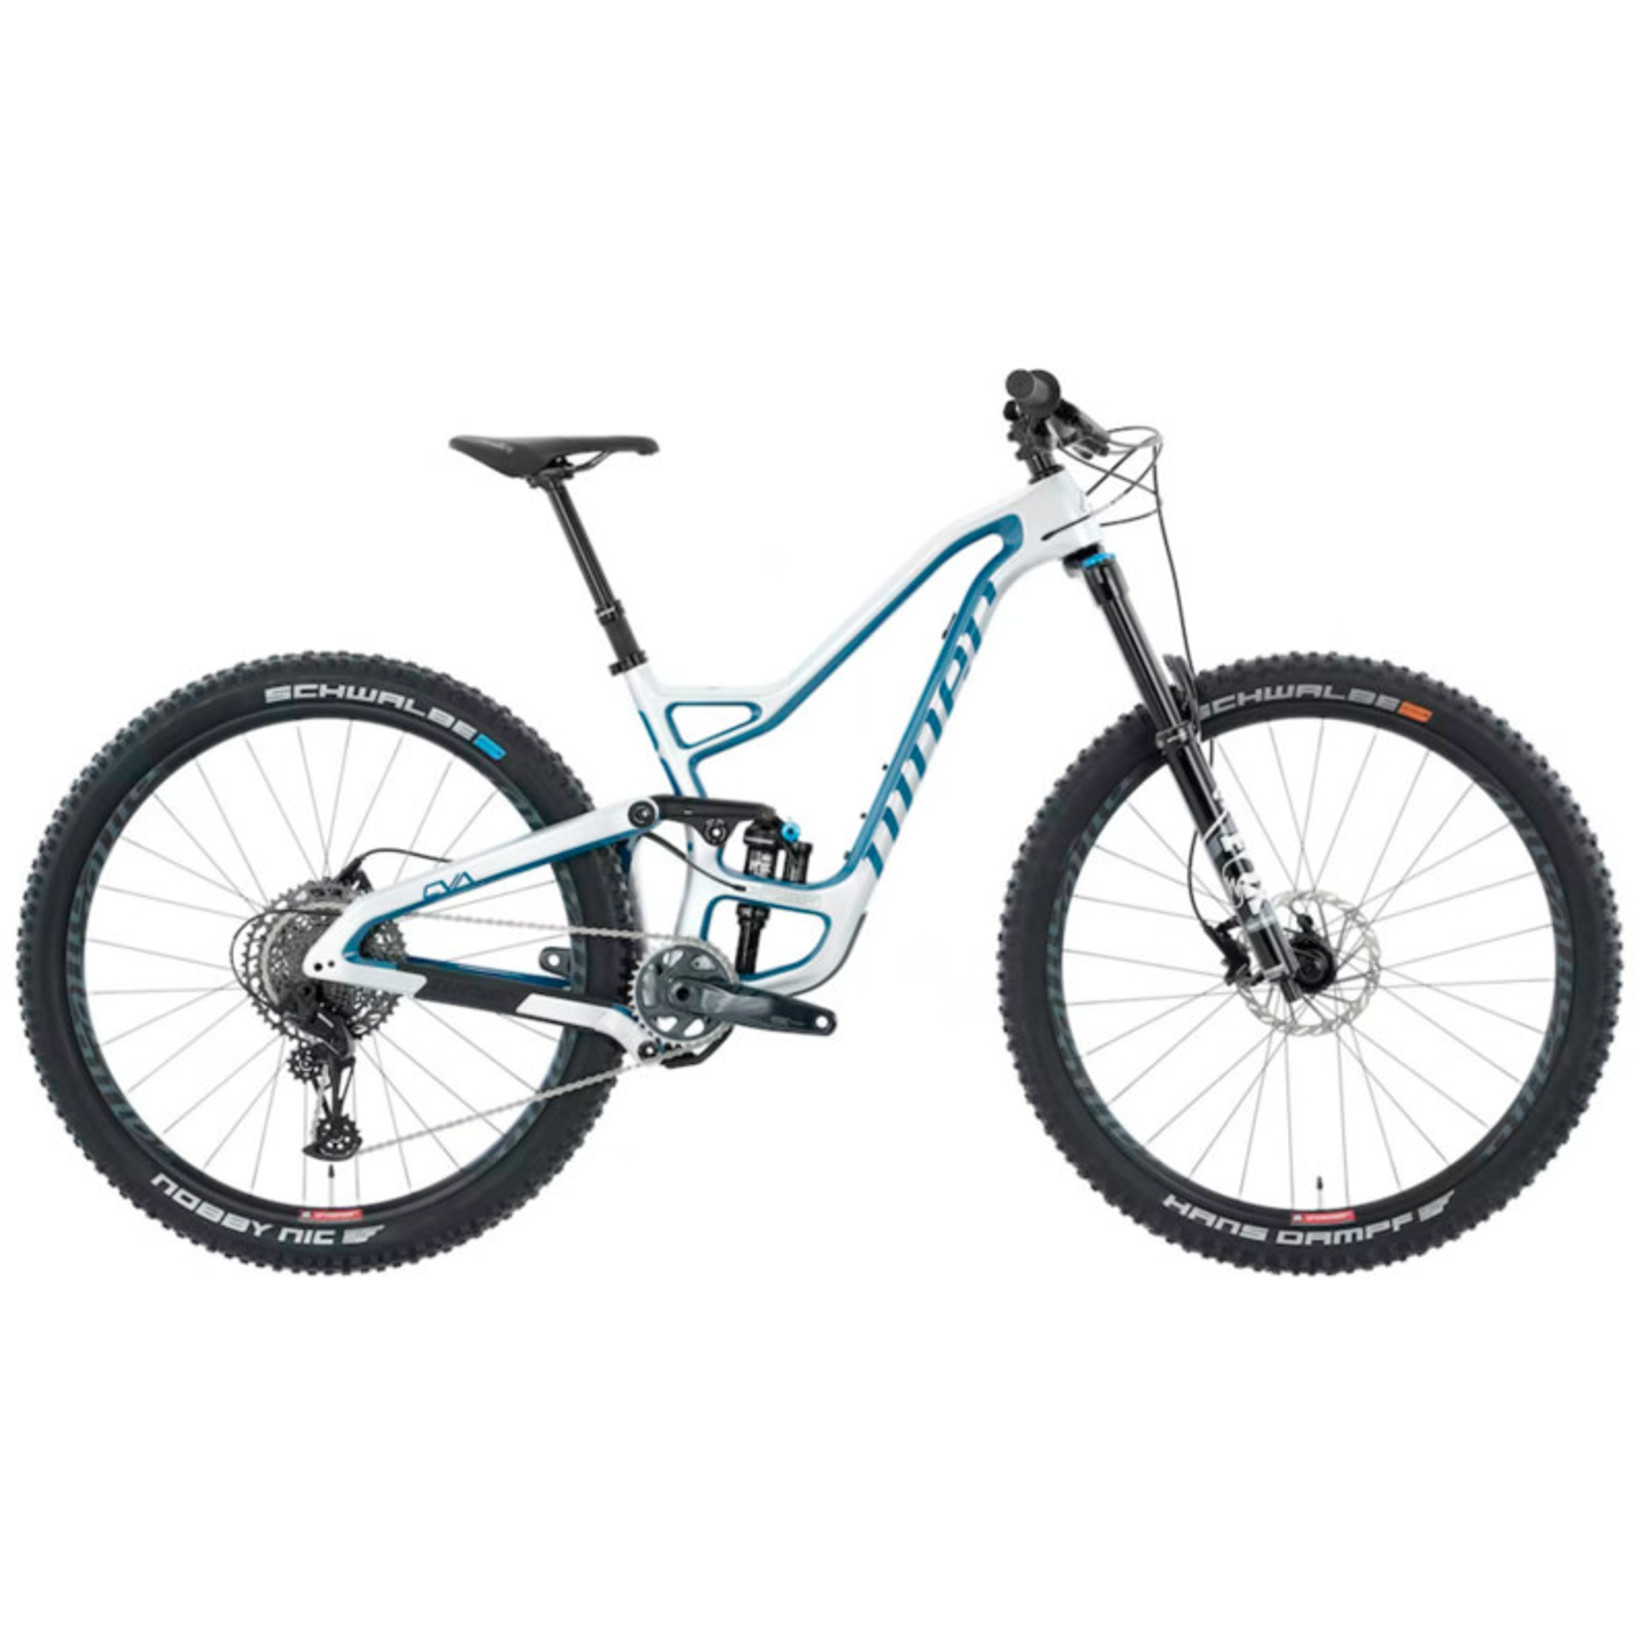 Niner Bikes Niner Rip 9 RDO - 2-Star Build - Baja Blue Carbon - Large